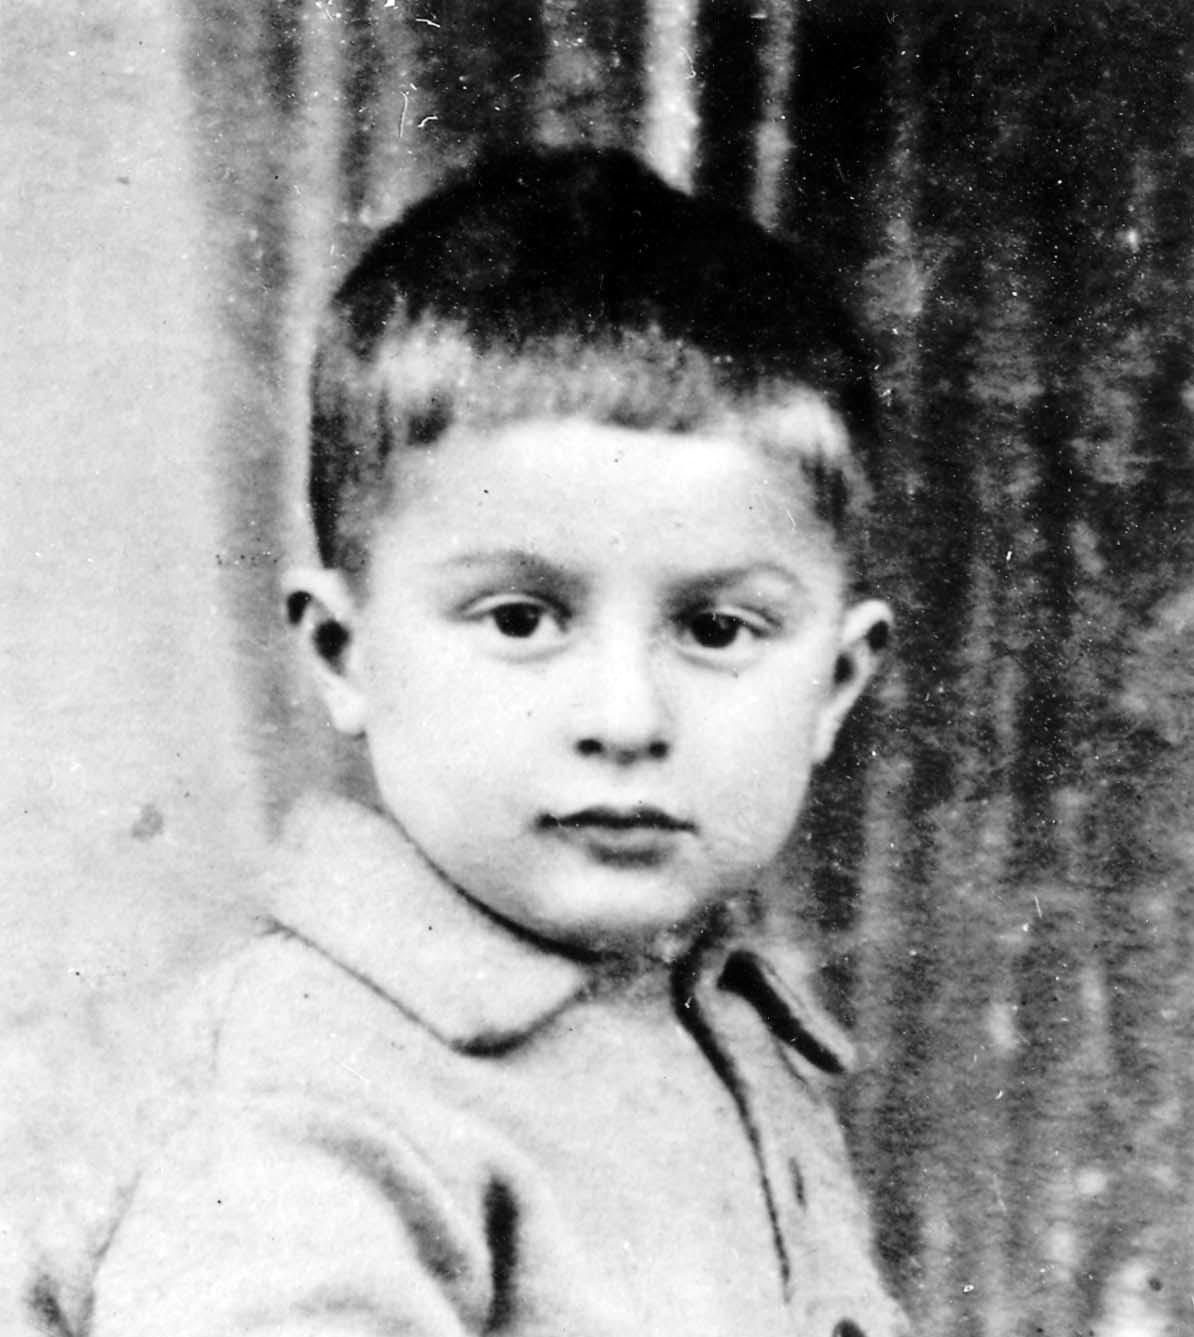 Dima Lysyanskiy was born in Kiev, Ukraine, in 1933. He was murdered in September 1941 at Babi Yar.